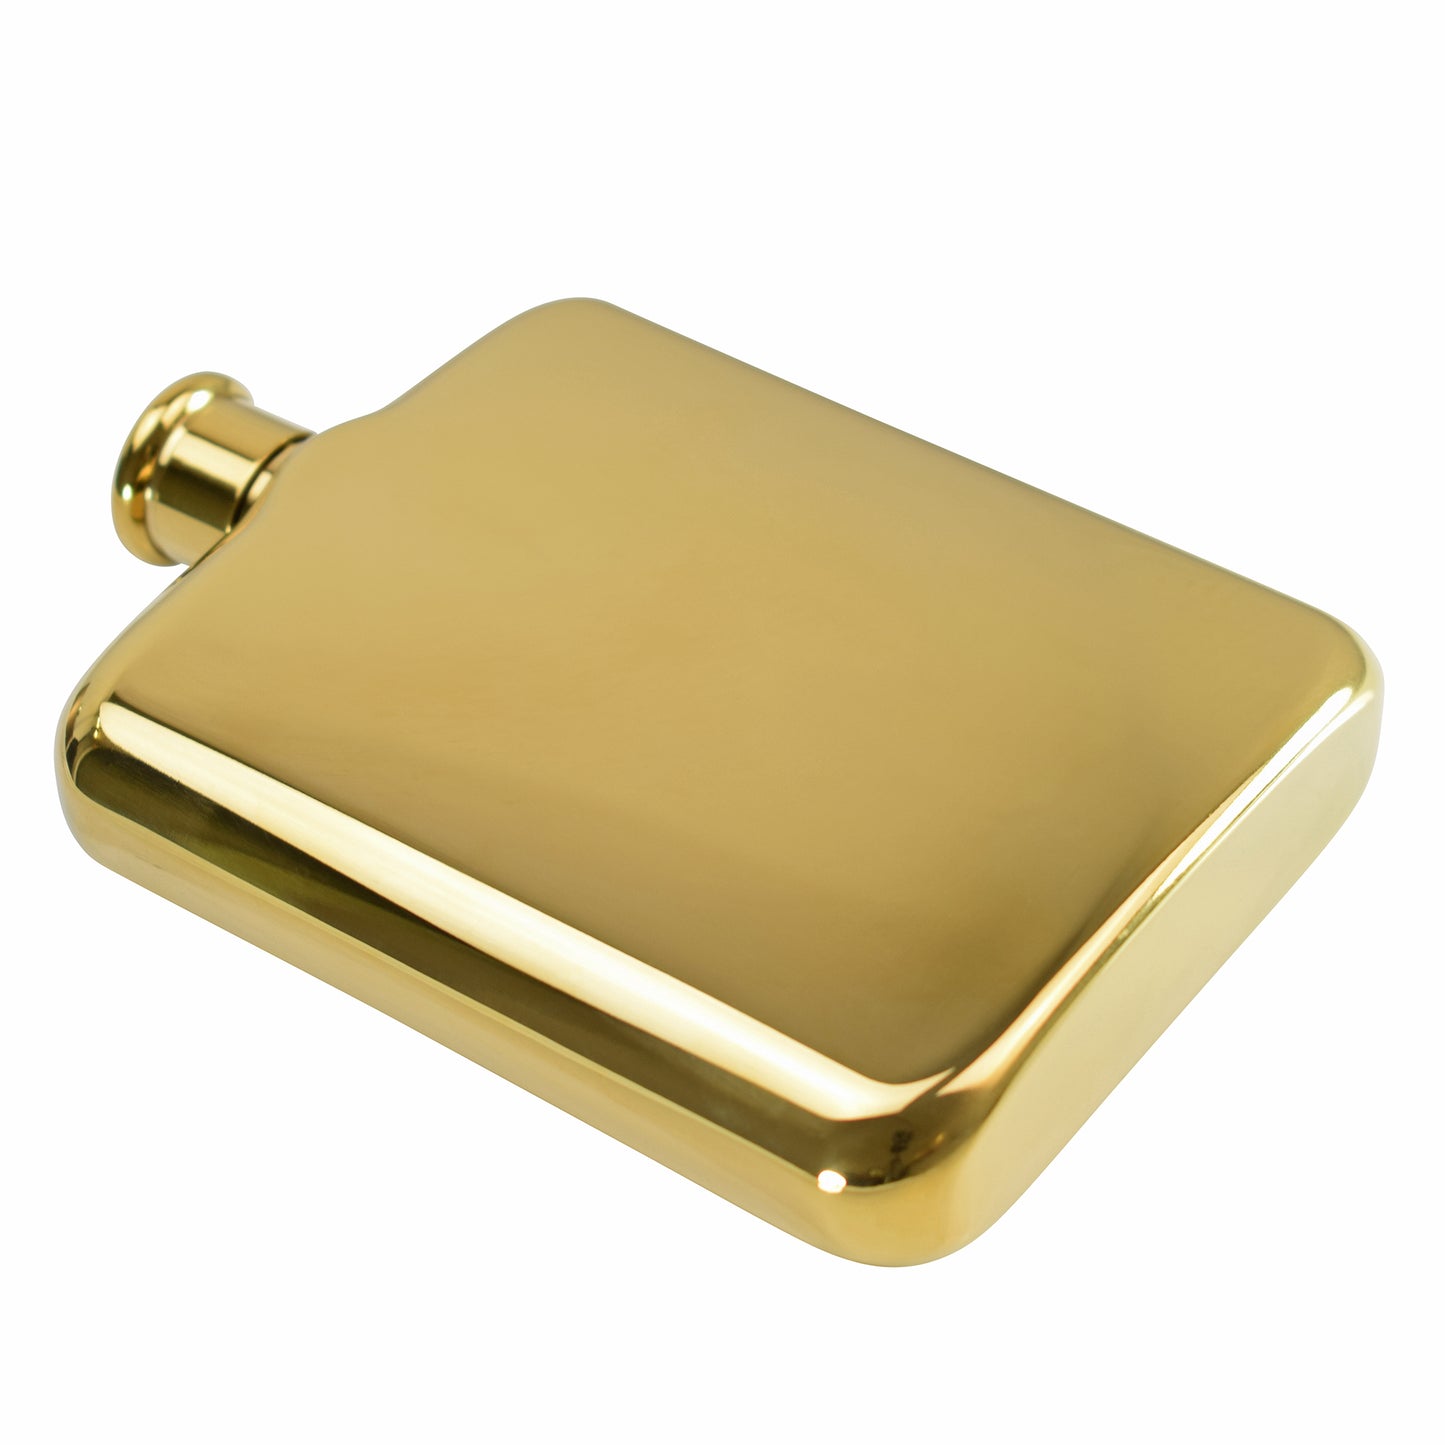 Shiny Gold Hip Flask